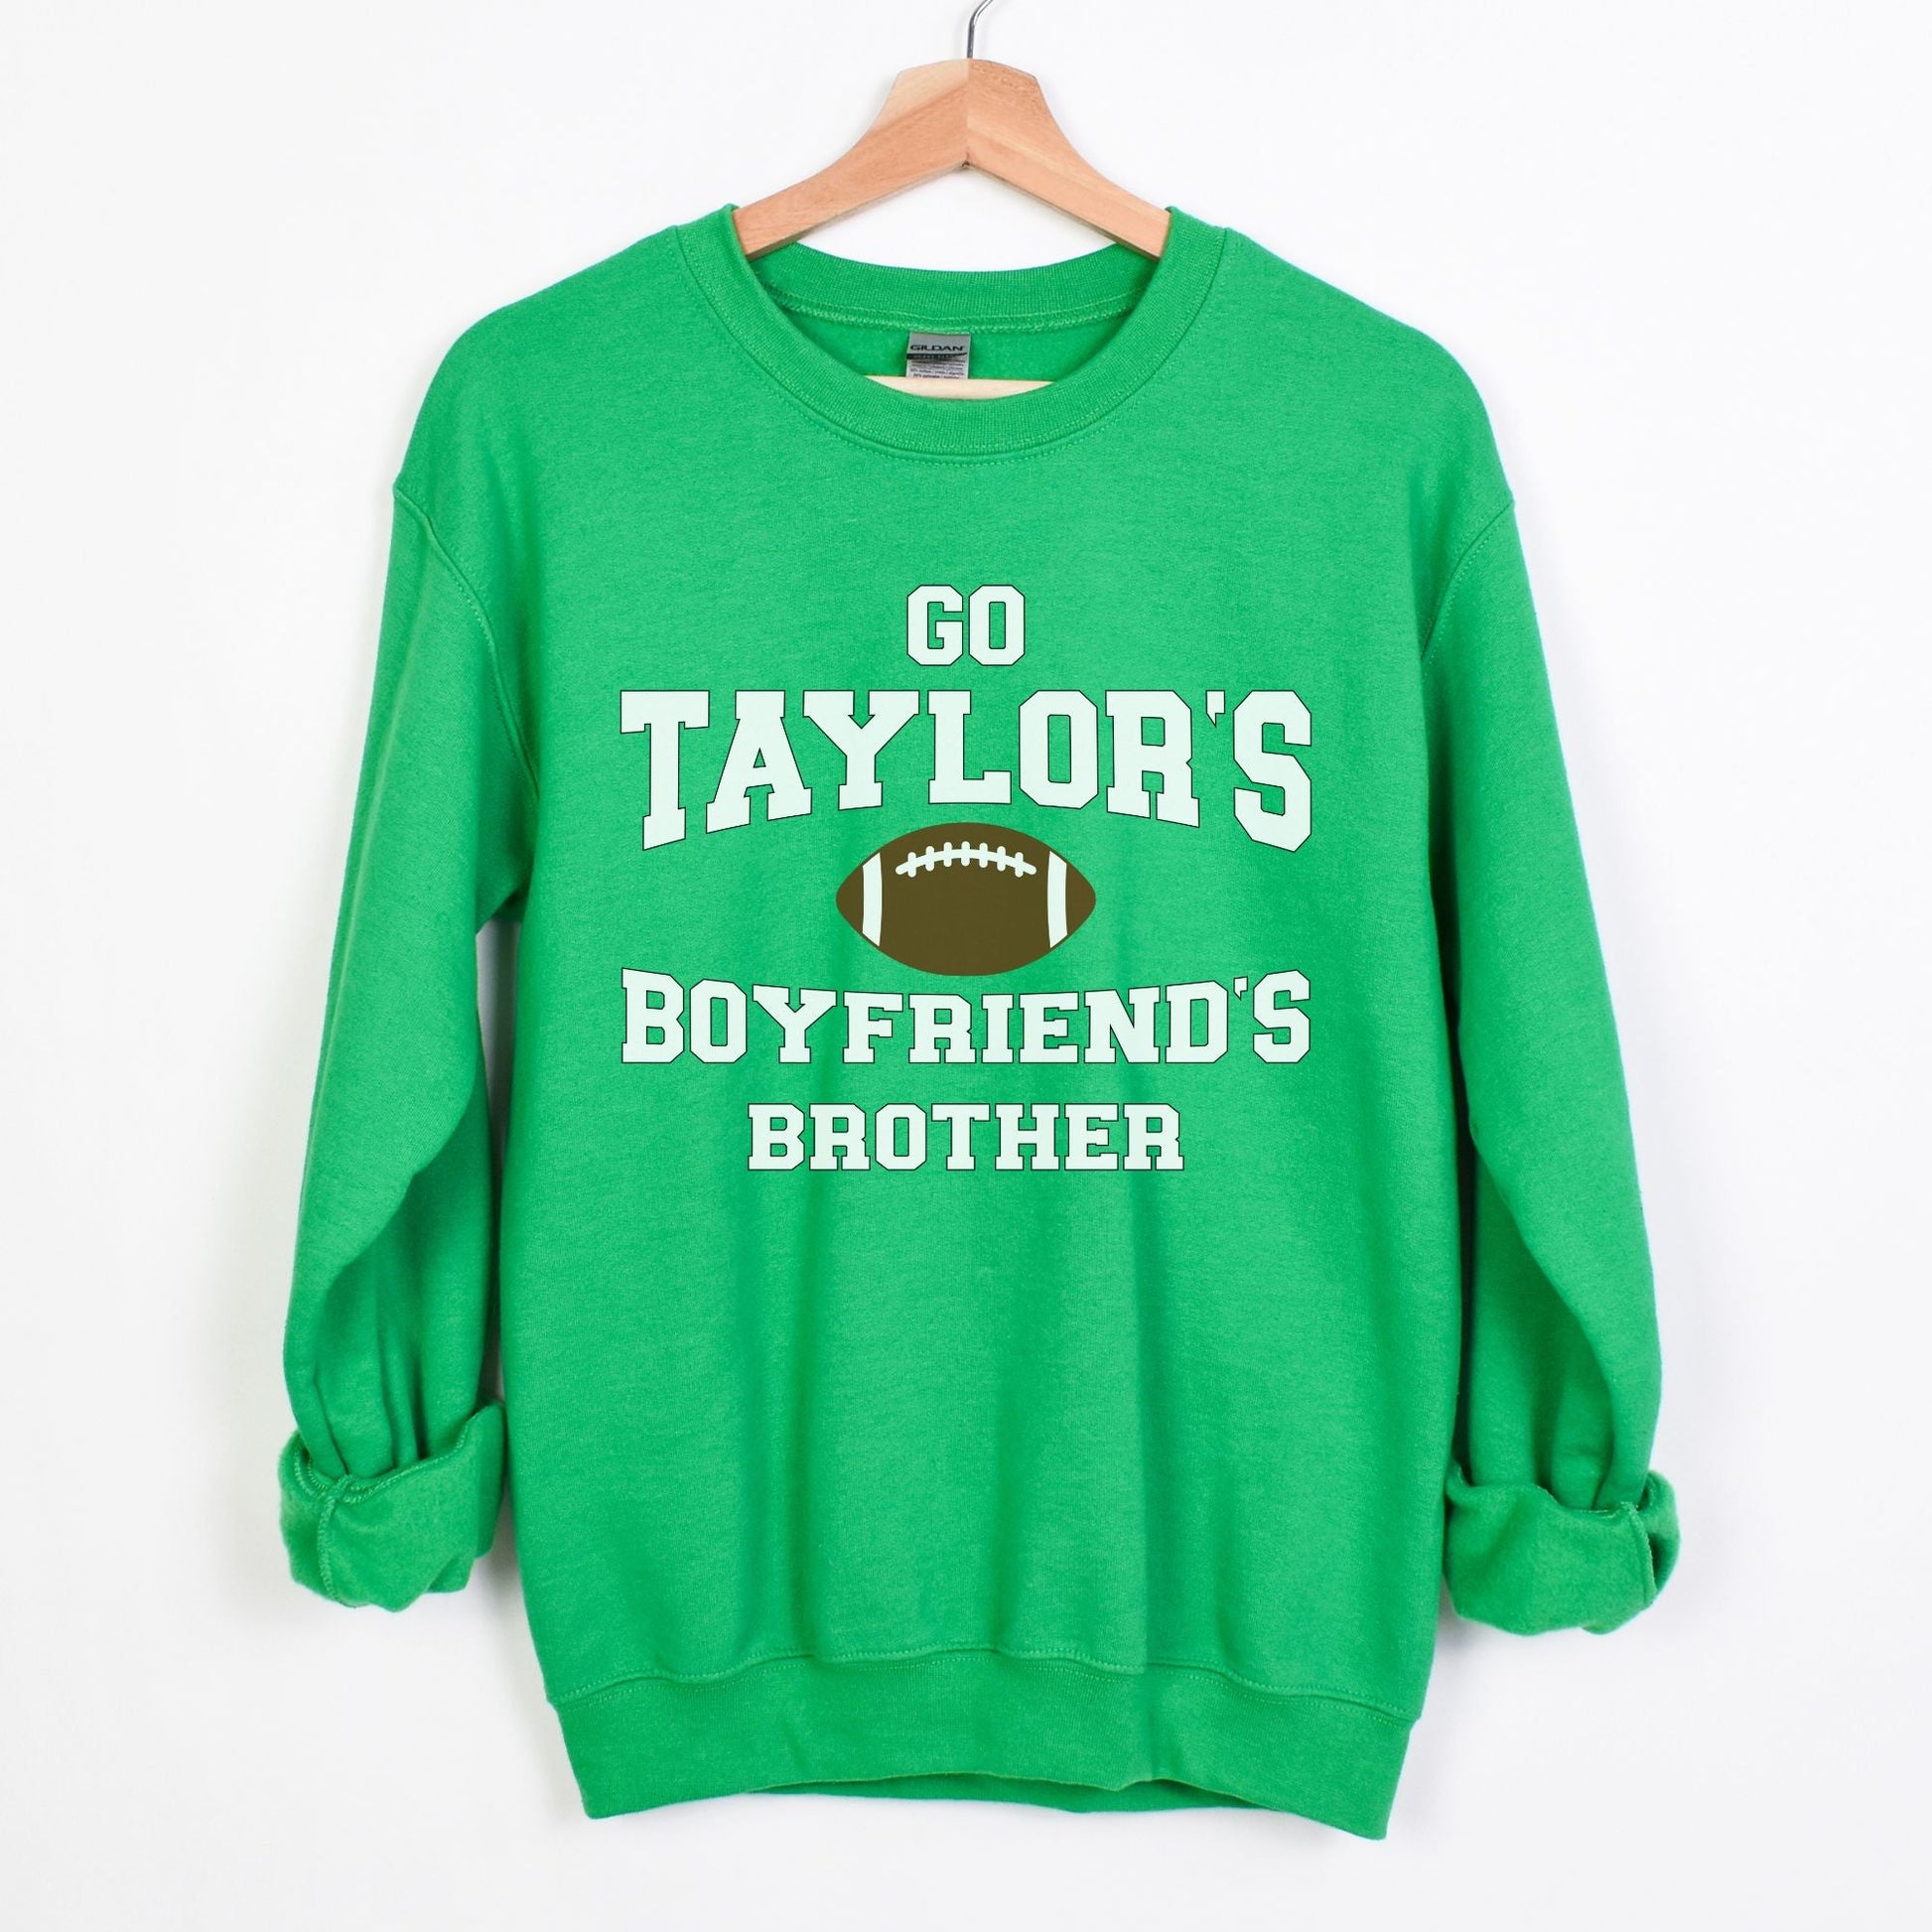 Taylor's BF Sweatshirt Kids - Little Color Company